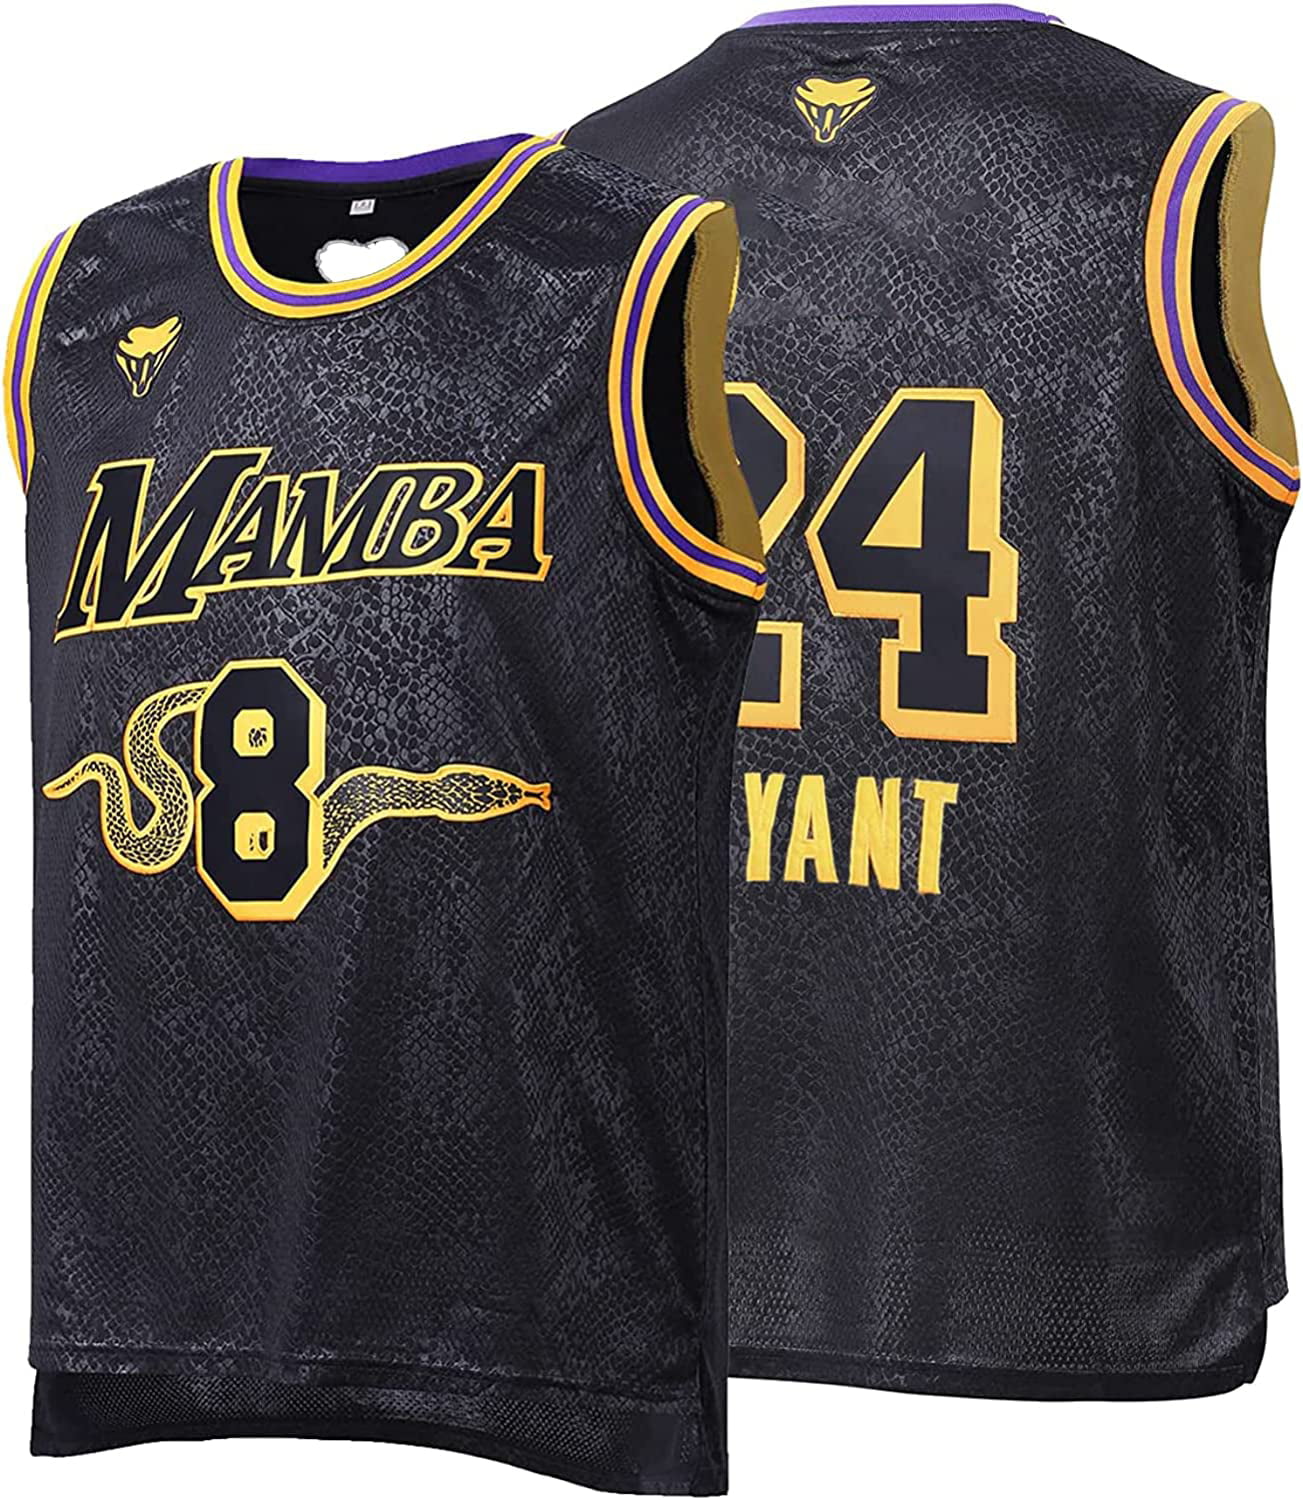 black mamba jersey number